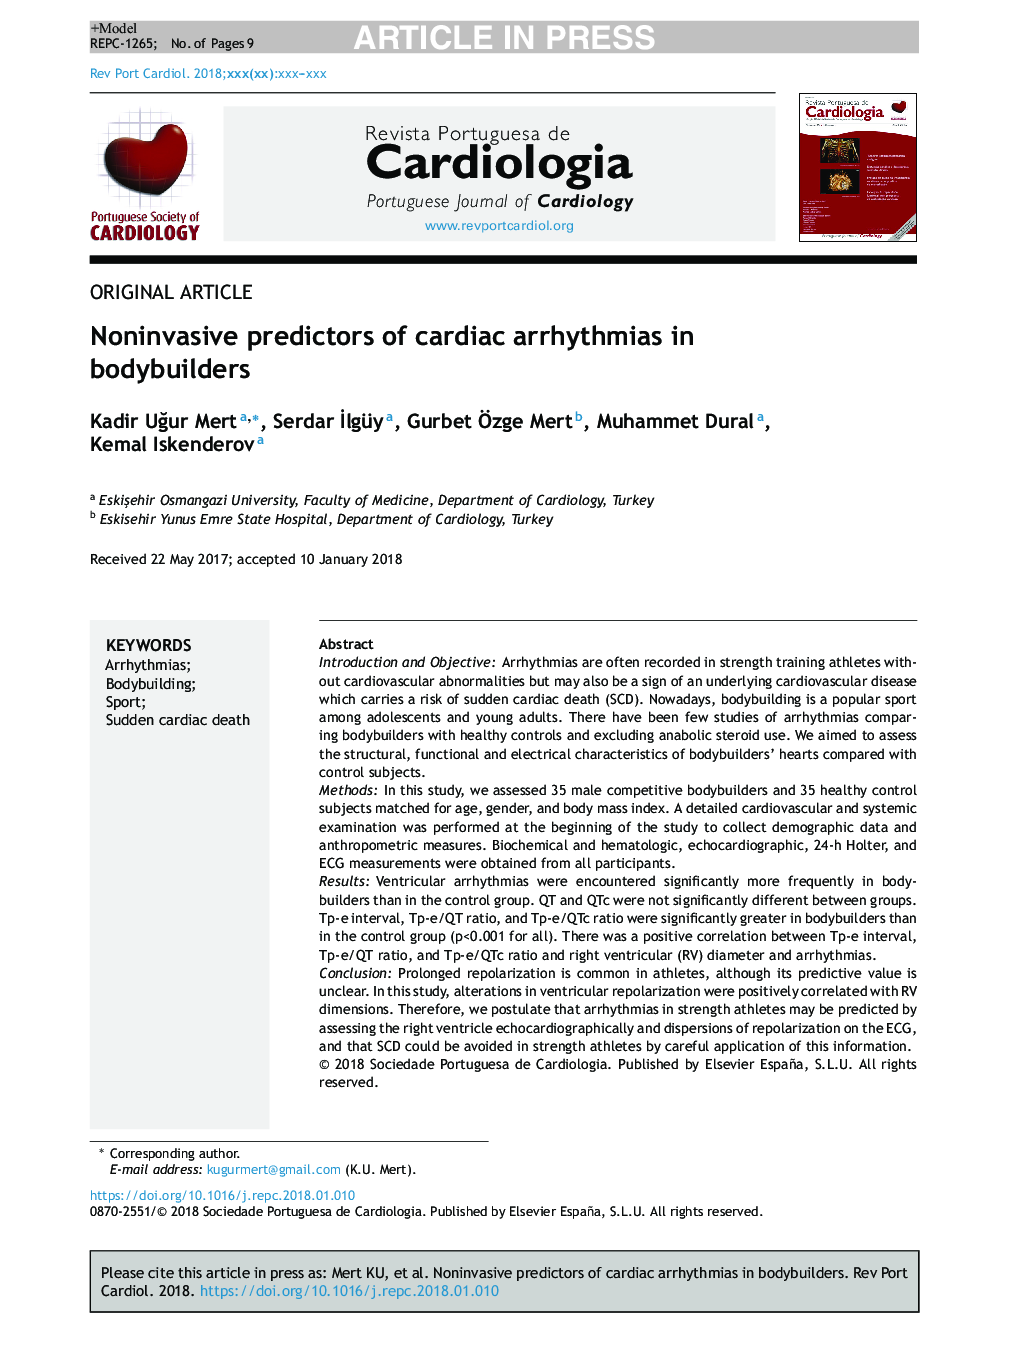 Noninvasive predictors of cardiac arrhythmias in bodybuilders